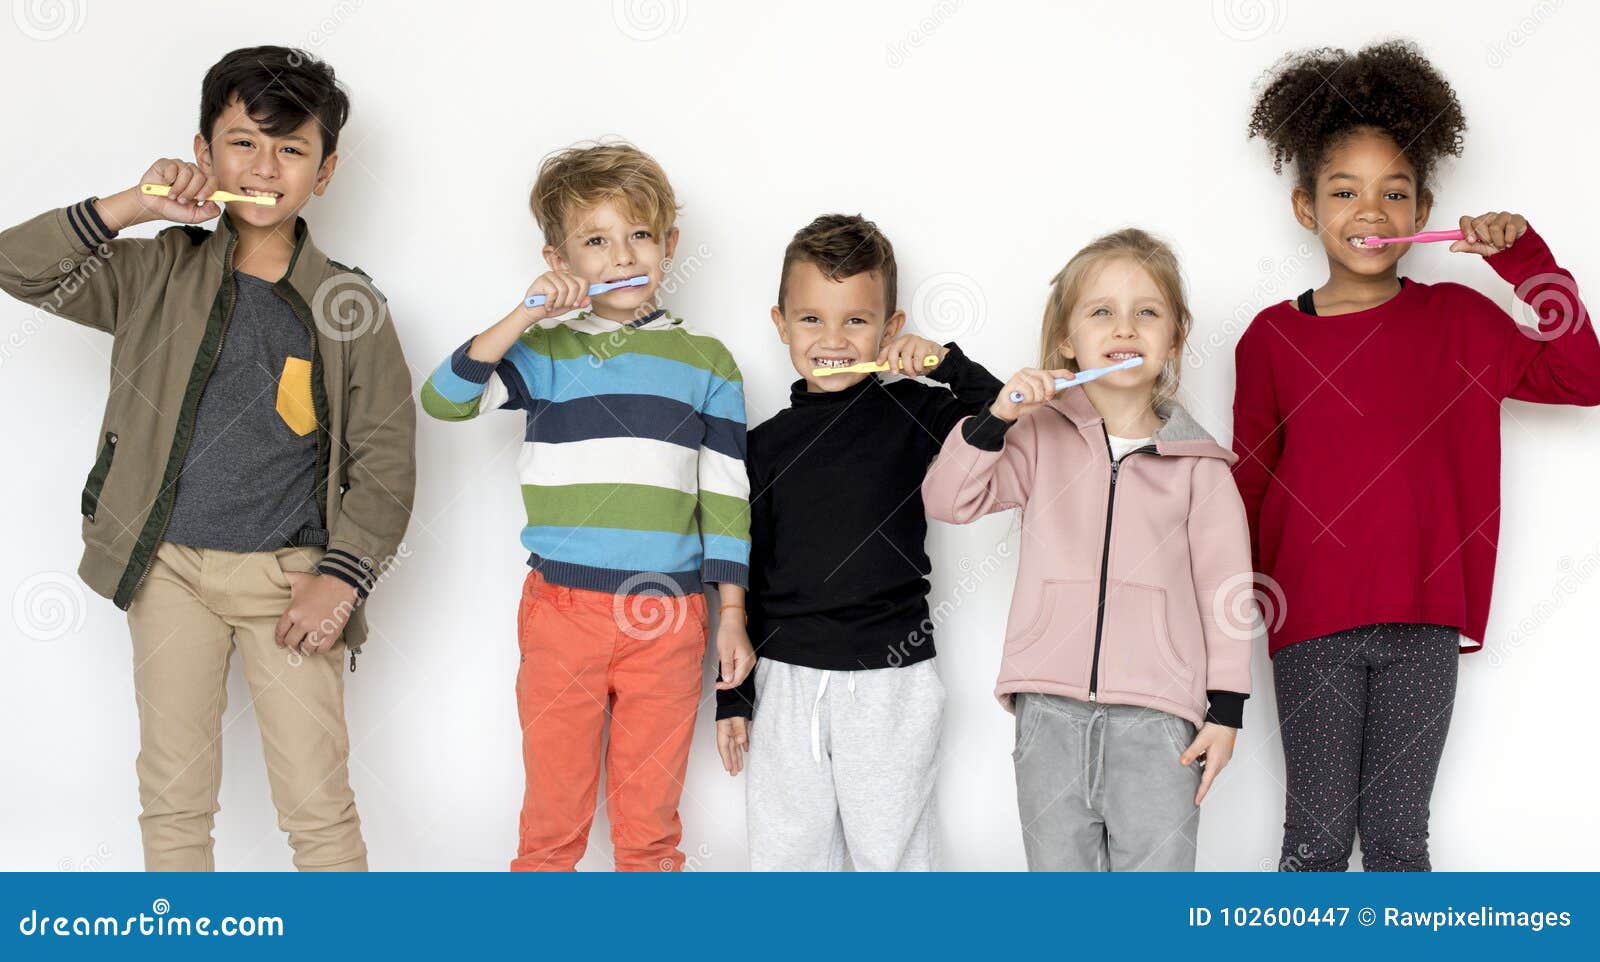 kids brushing their teeth  on white background